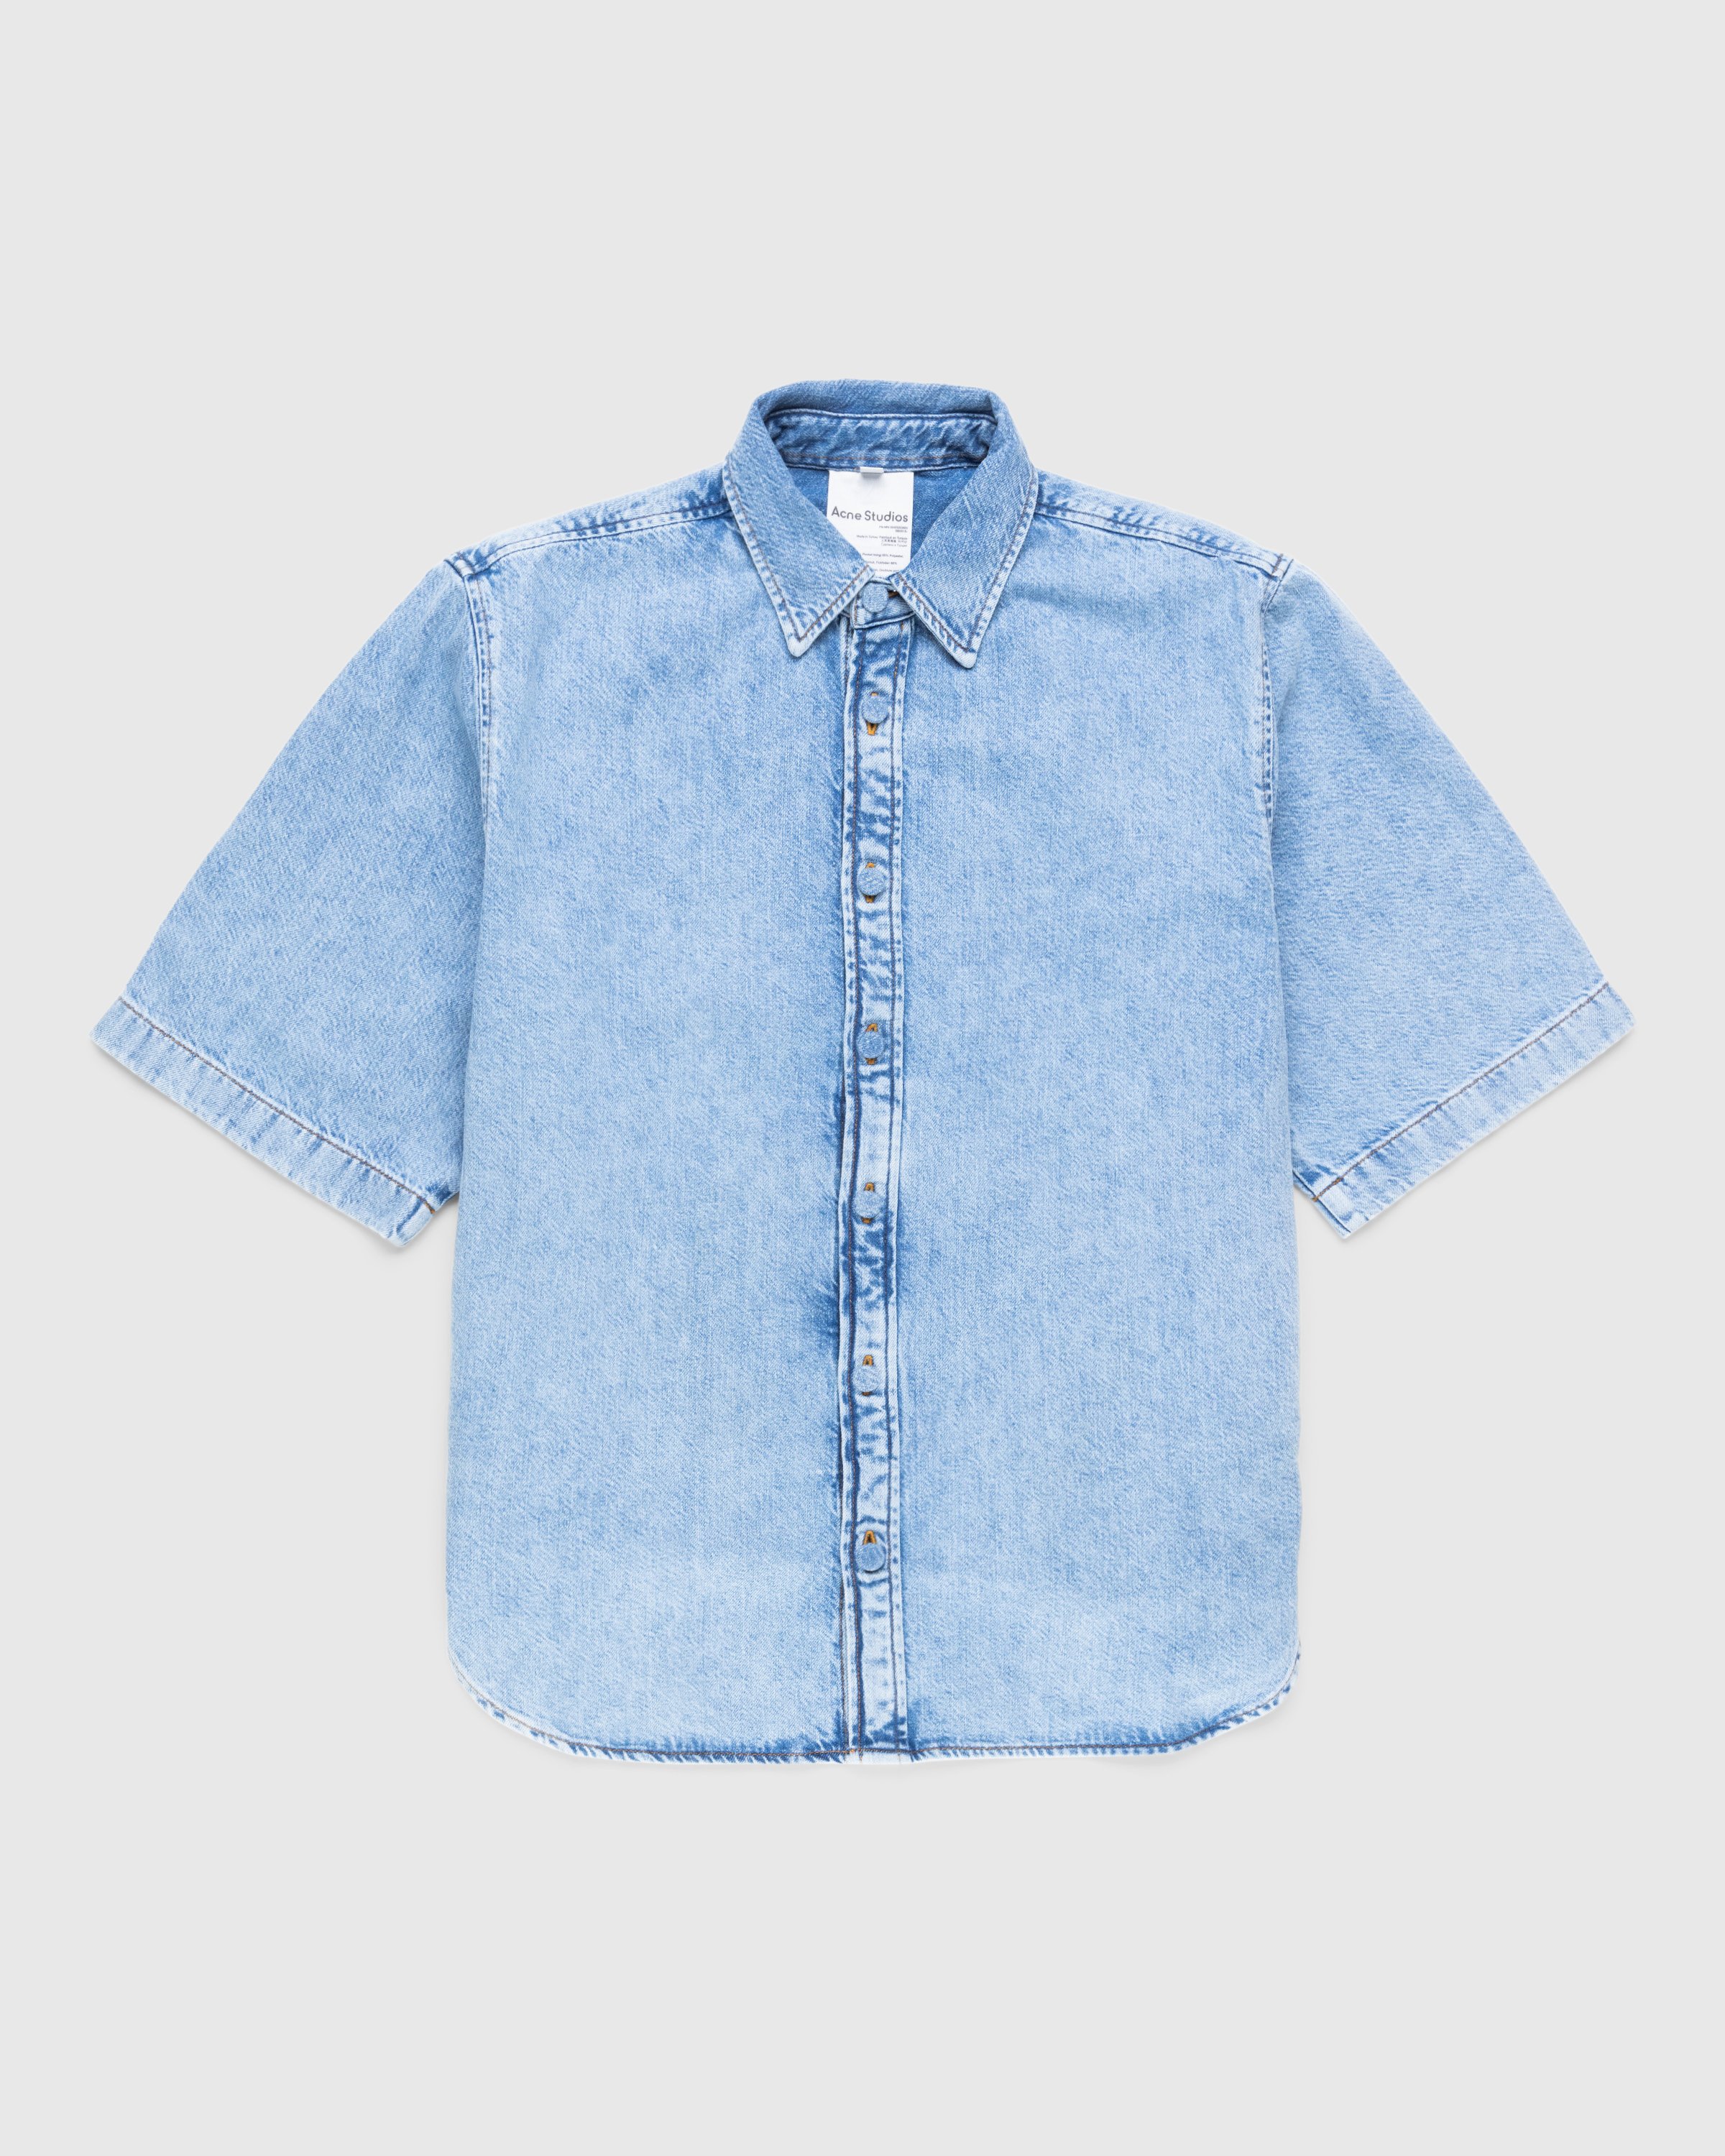 Acne Studios - Denim Button-Up Shirt Blue - Clothing - Blue - Image 1